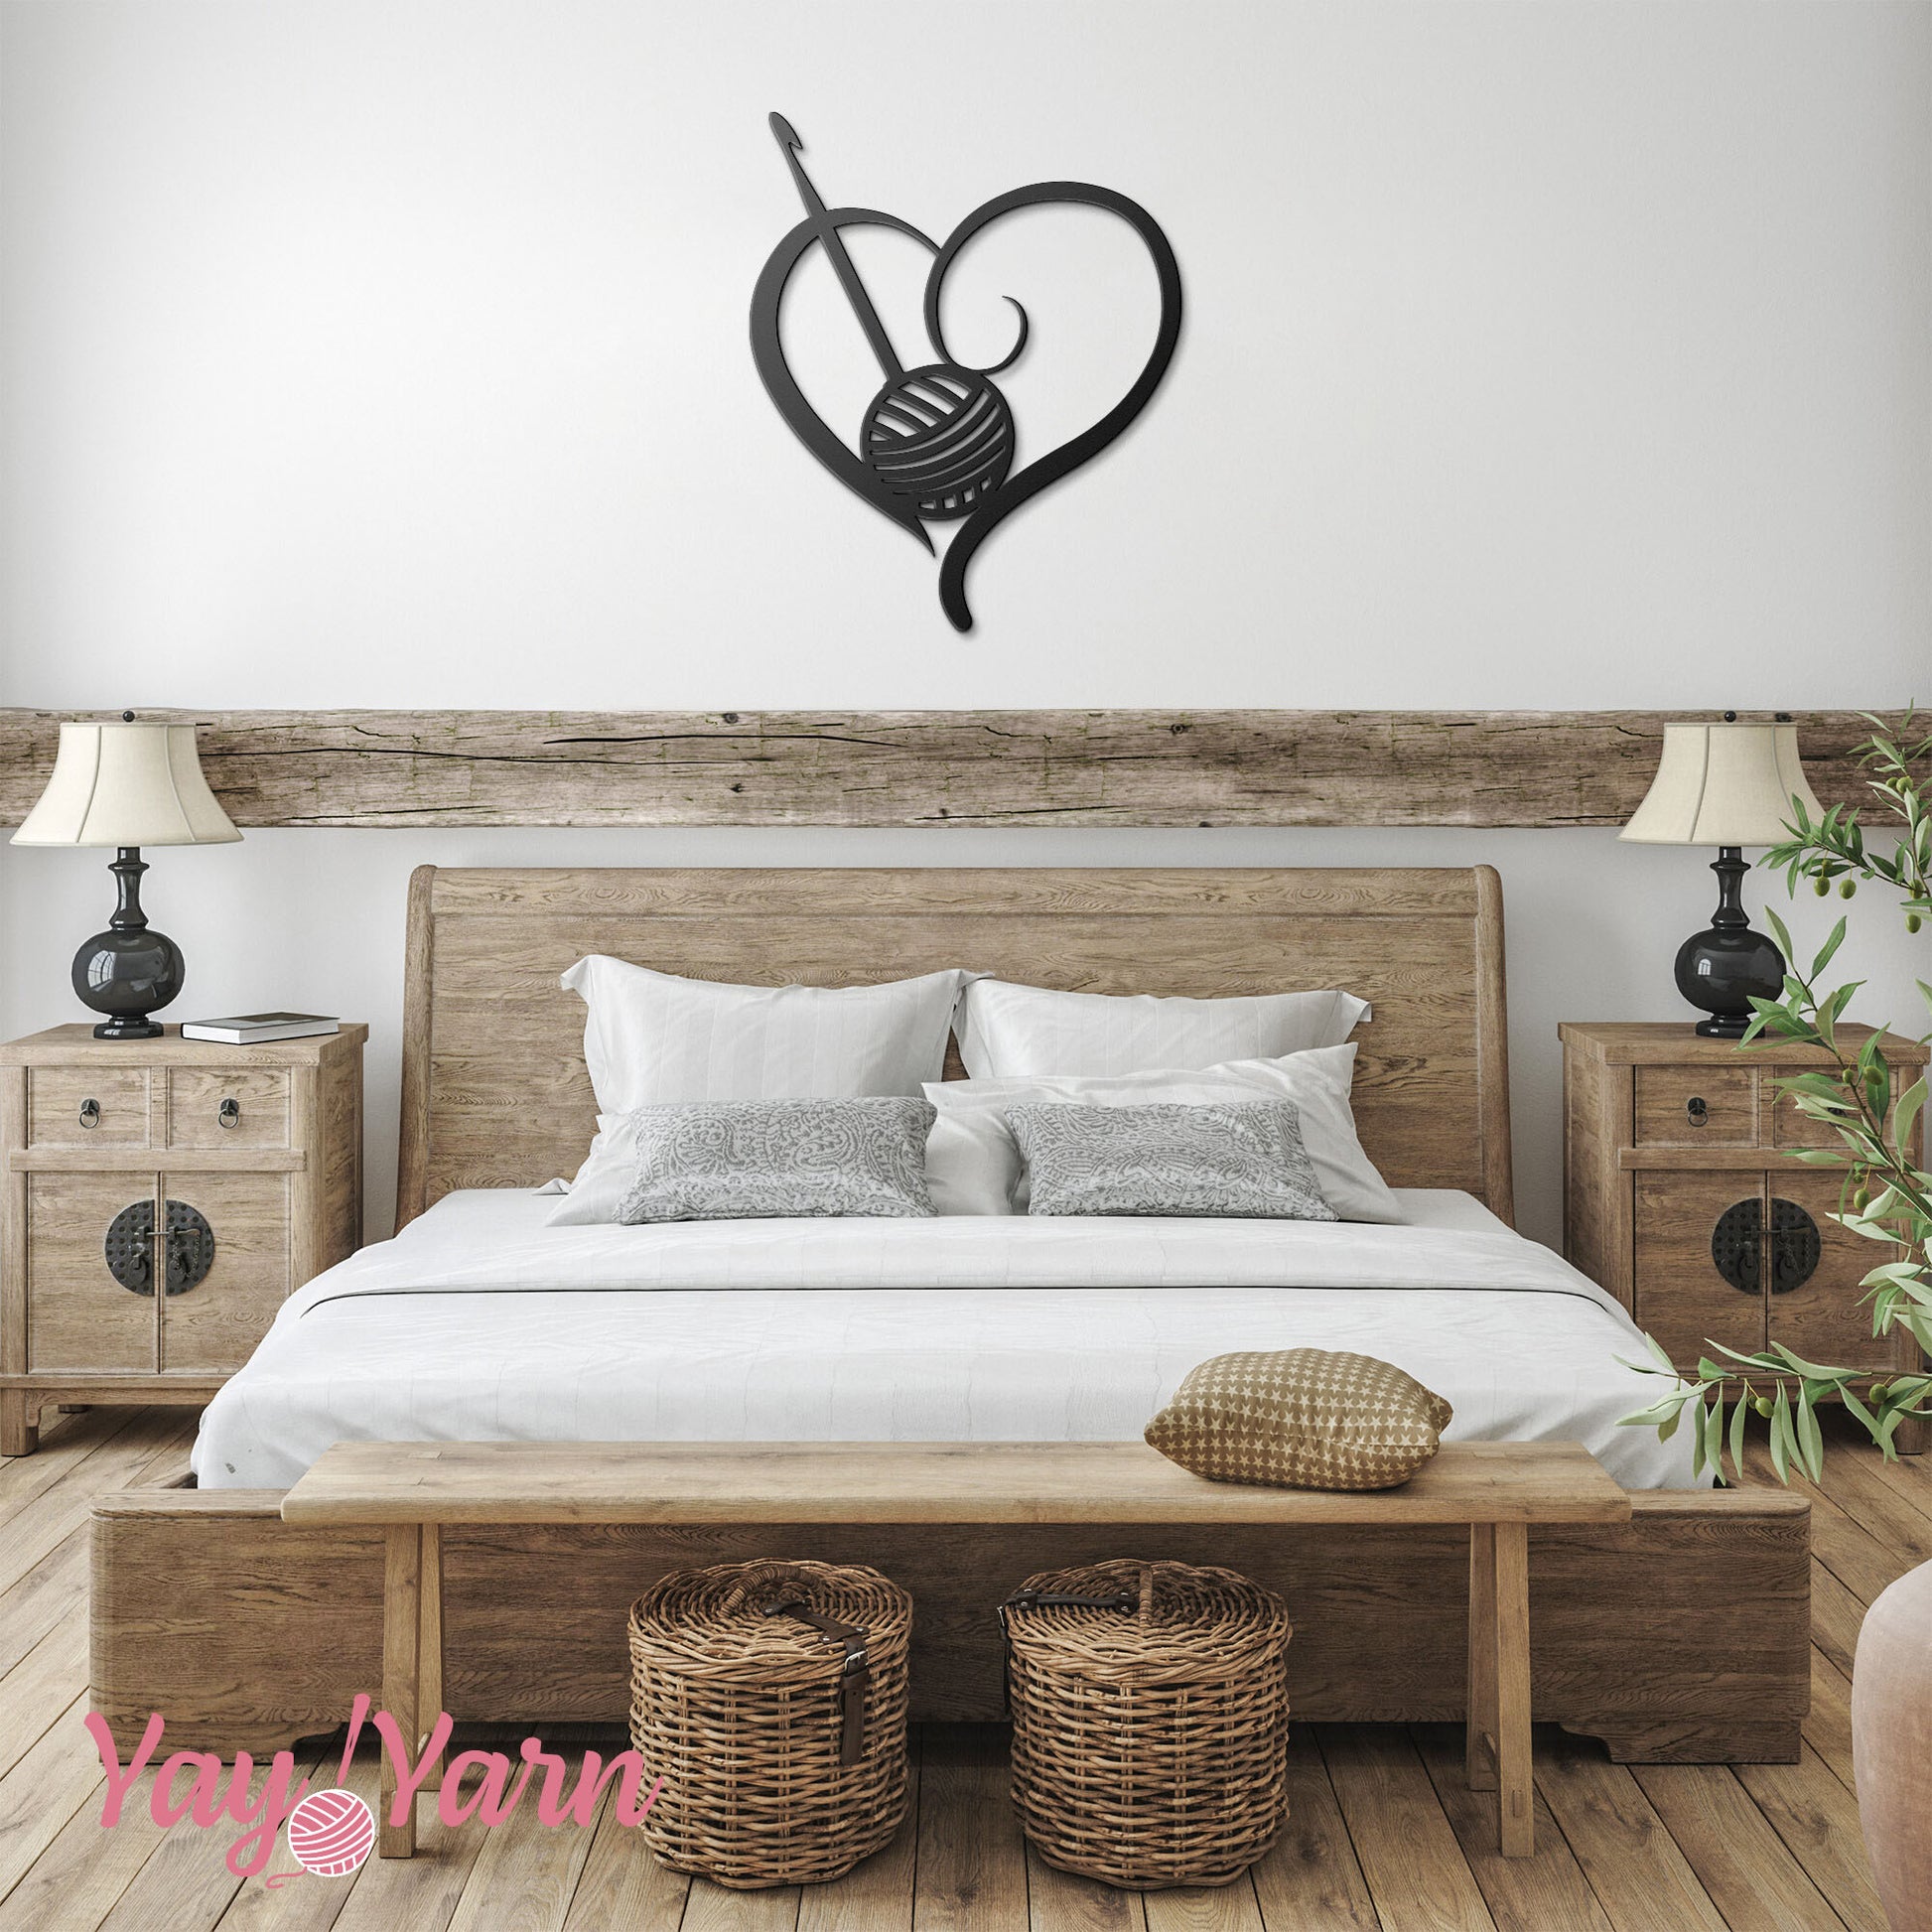 Crochet Heart Metal Wall Art Black on White While in Boho Bedroom